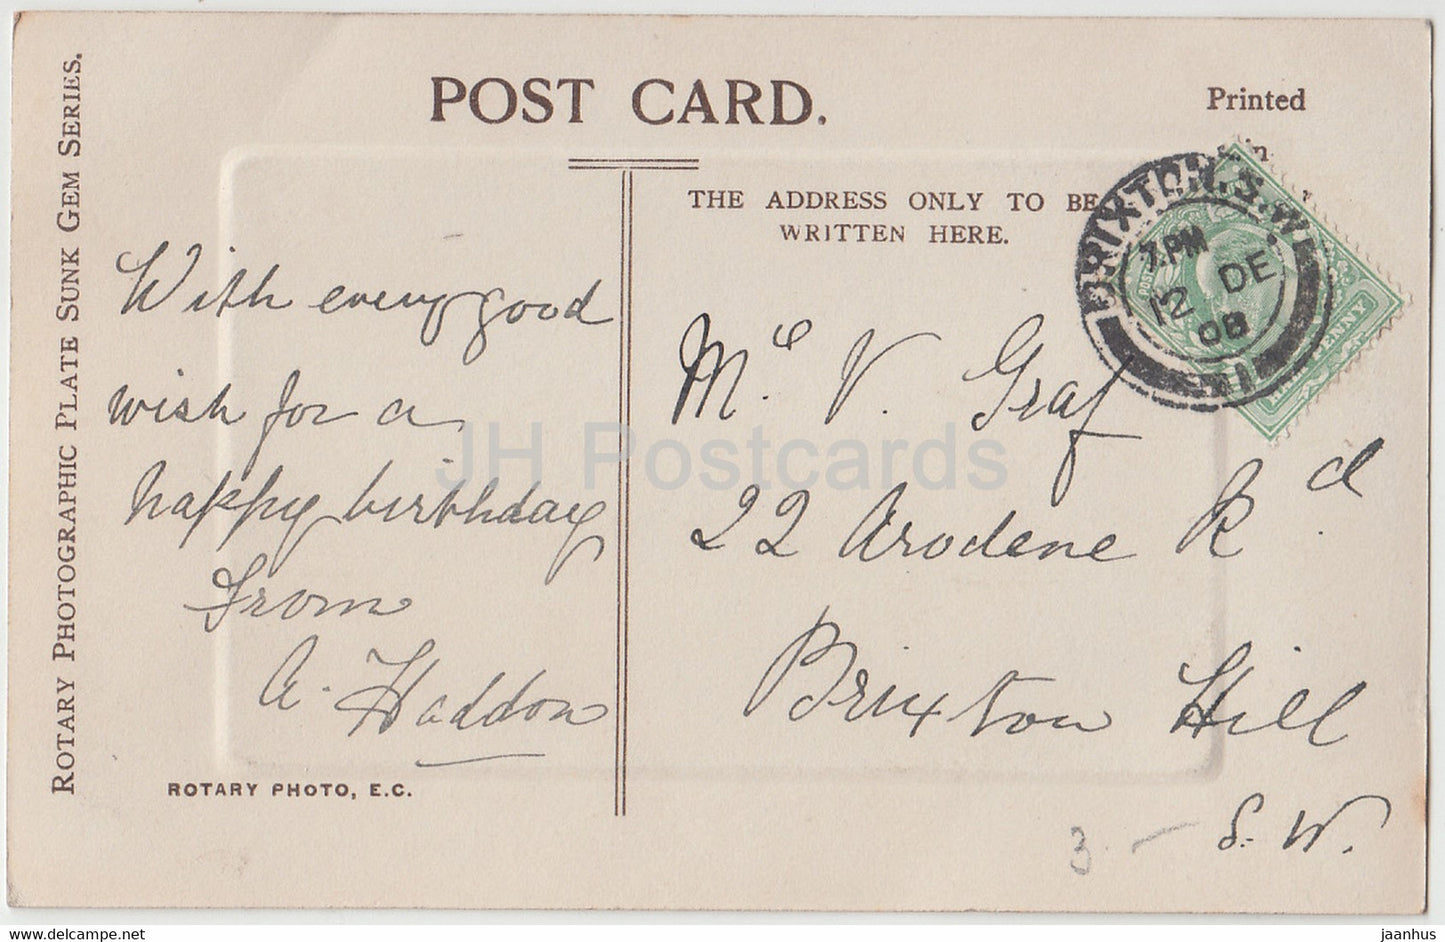 Birthday Greeting Card - Many Happy Returns - kitten - P 1737 - old postcard - 1908 - United Kingdom - used